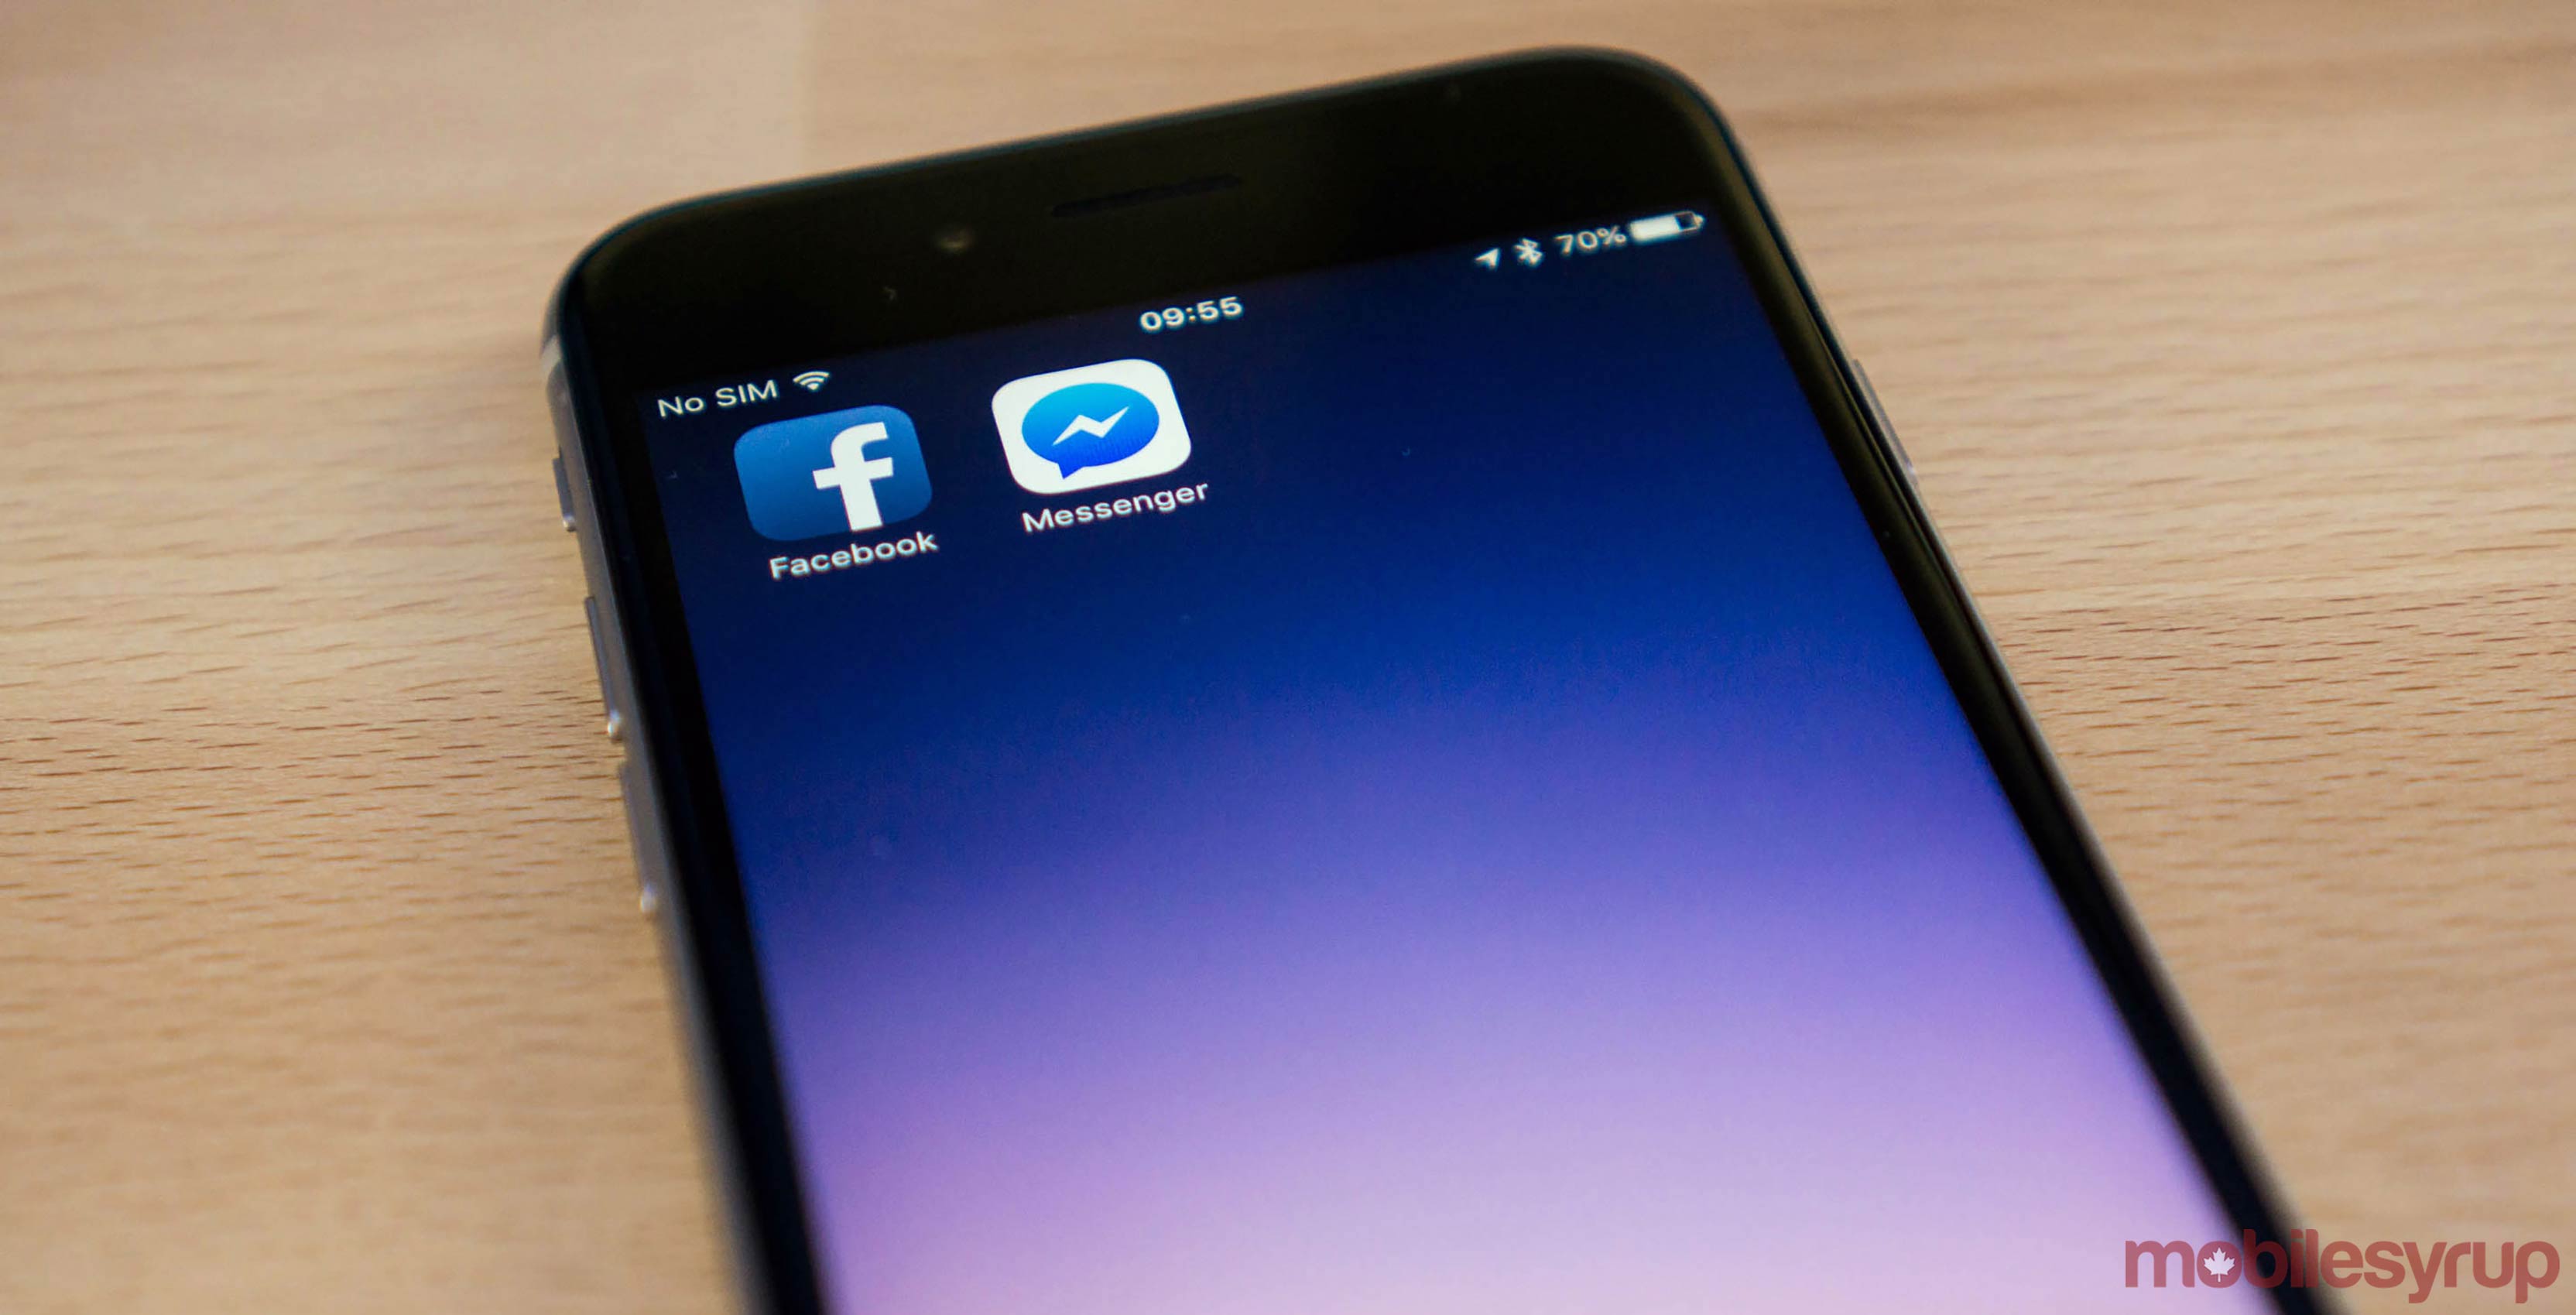 Facebook Messenger app on phone